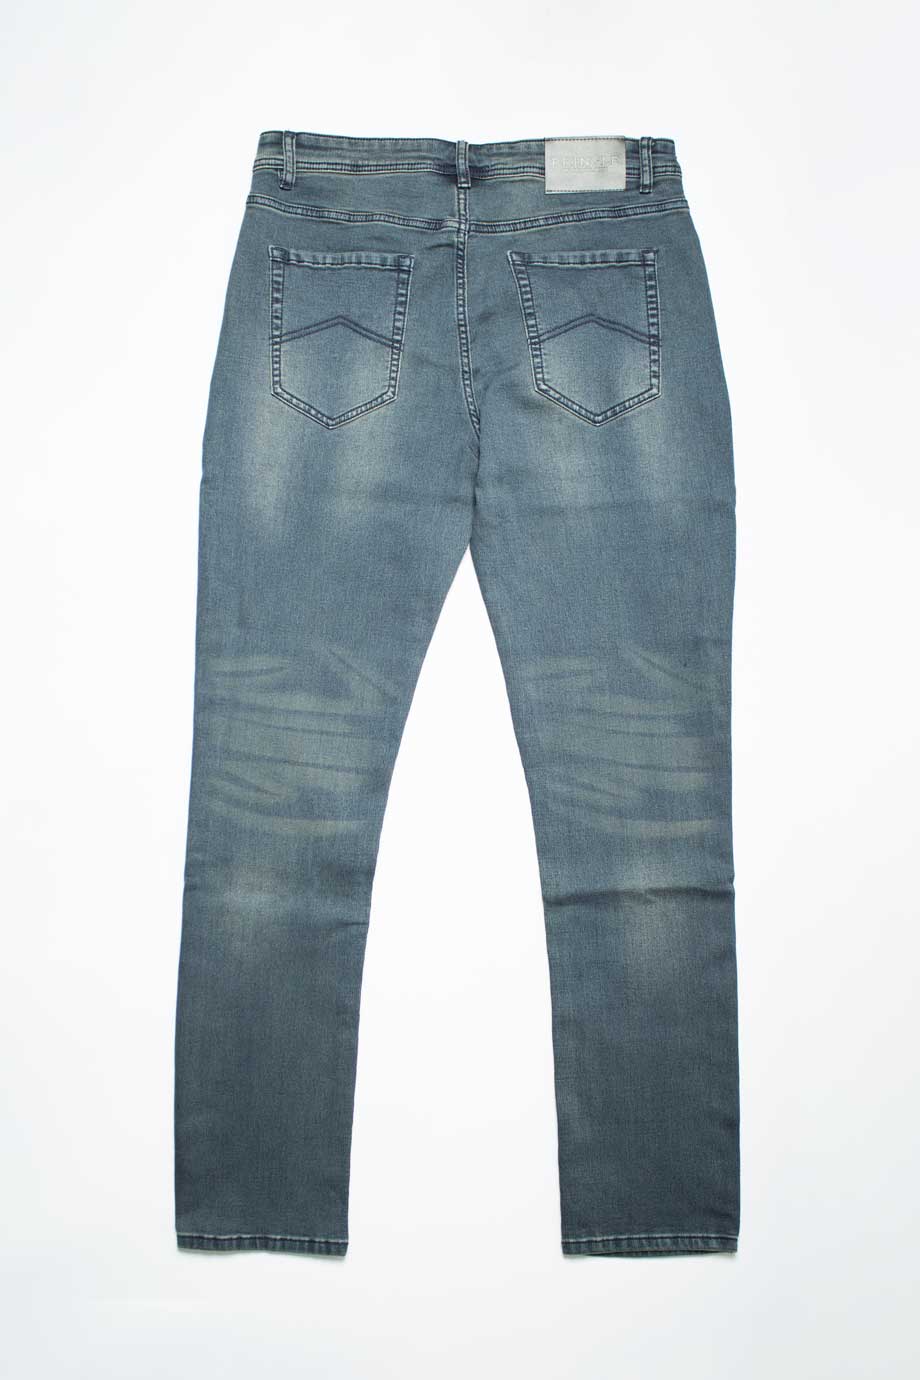 Pringle Denim Blue Modern Fit Jeans